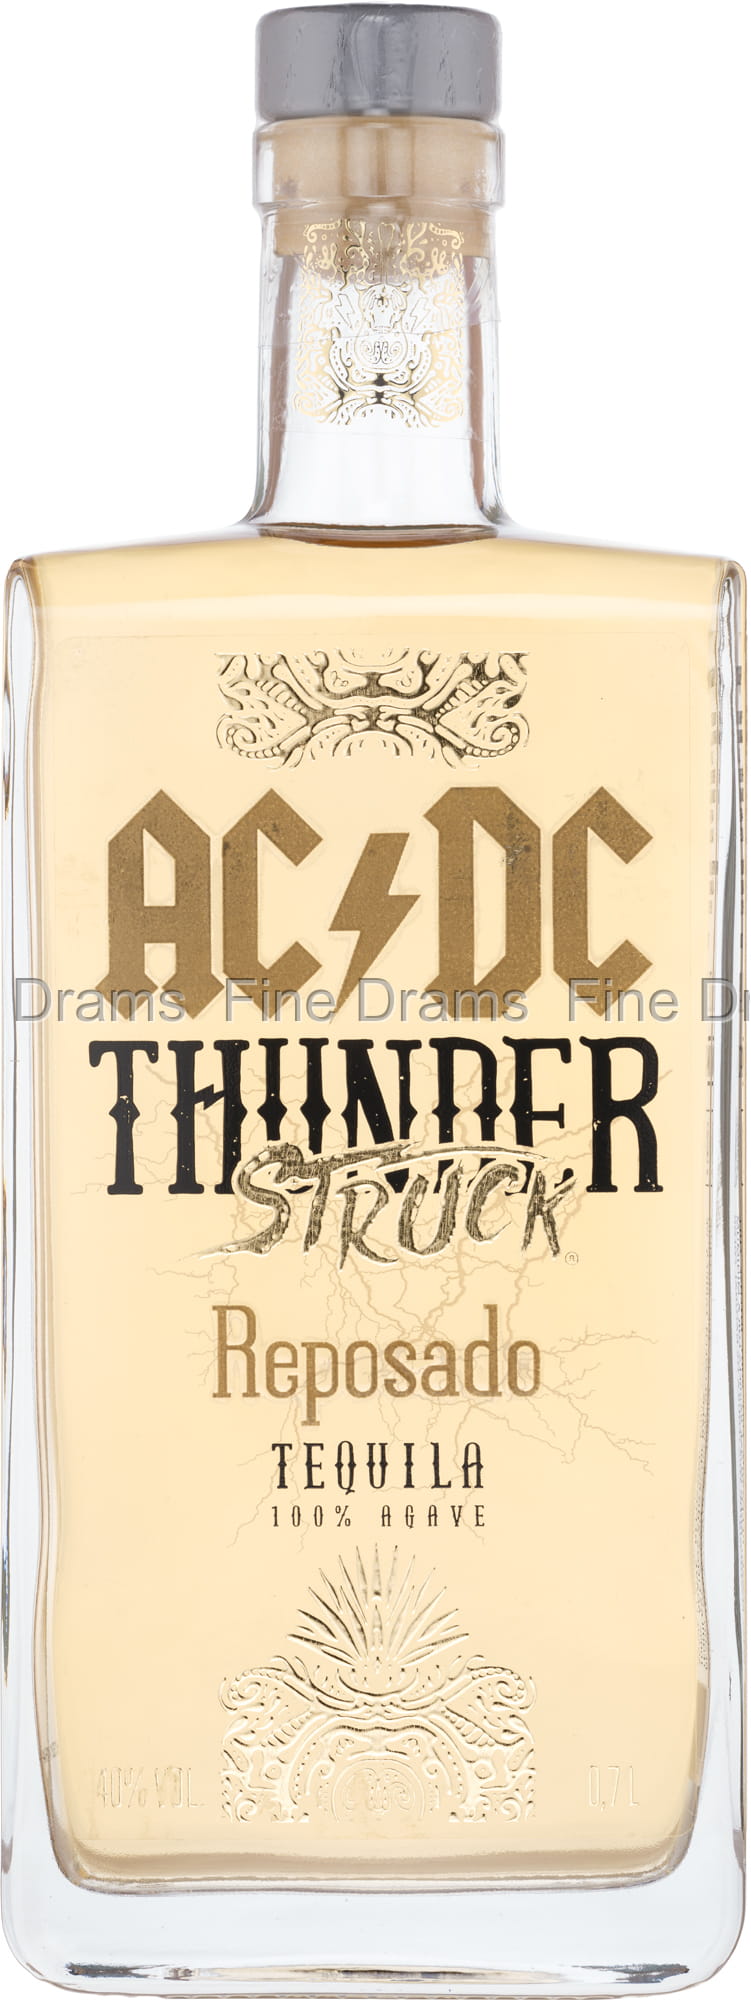 Serrated Ferie Kong Lear AC/DC Thunderstruck Reposado Tequila